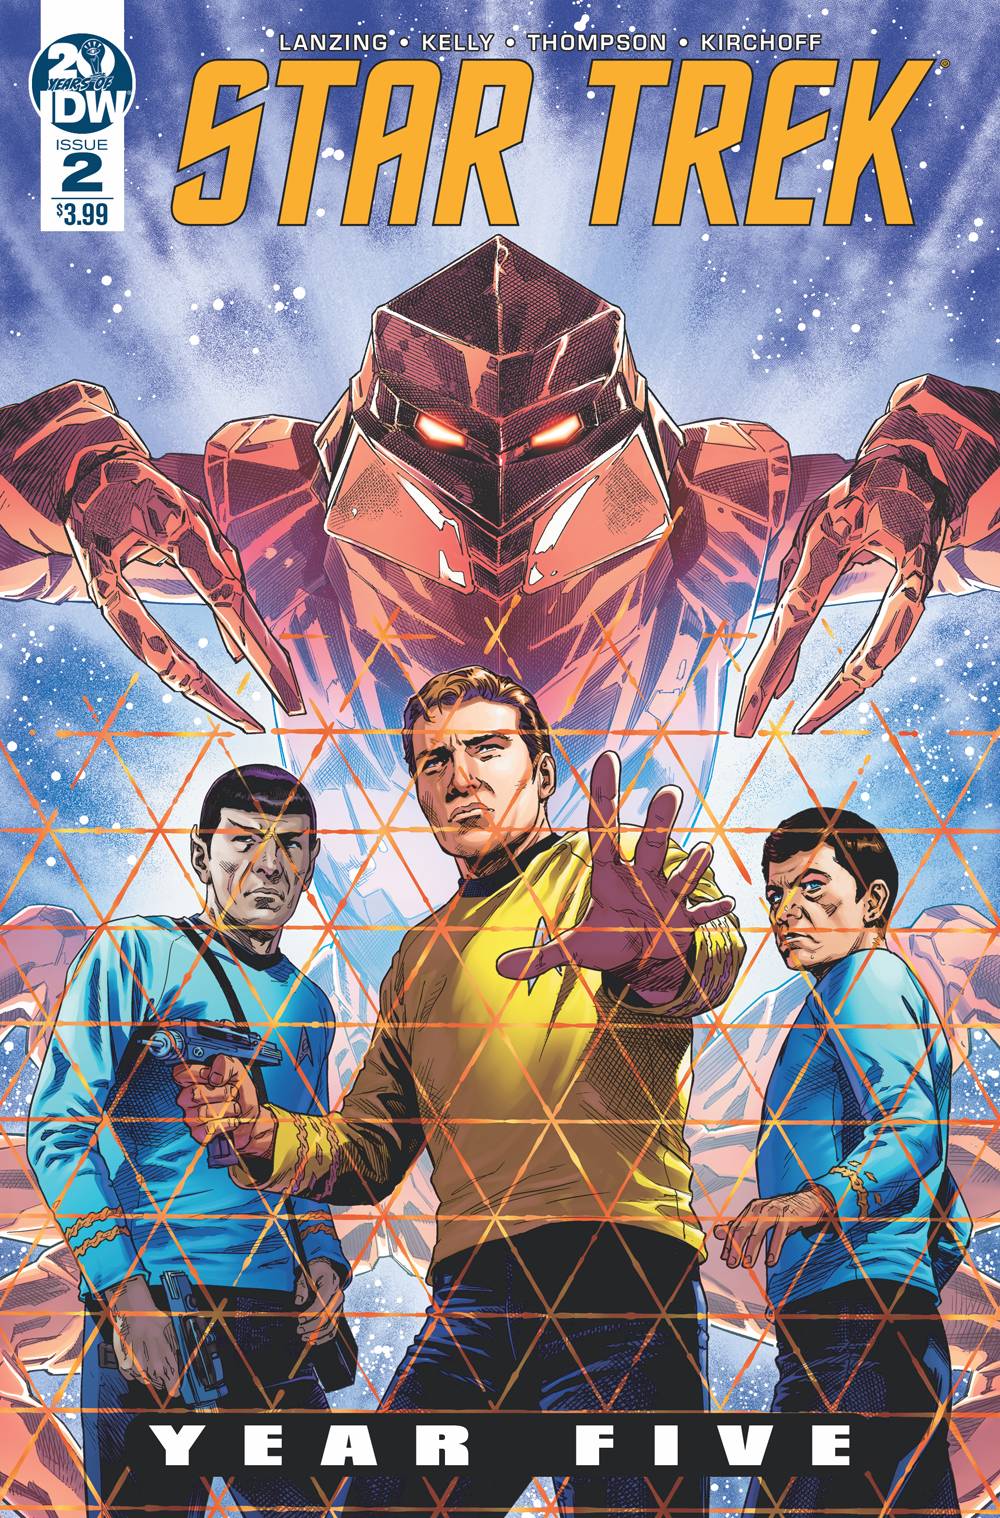 Star Trek Year Five #2 Cover A Thompson